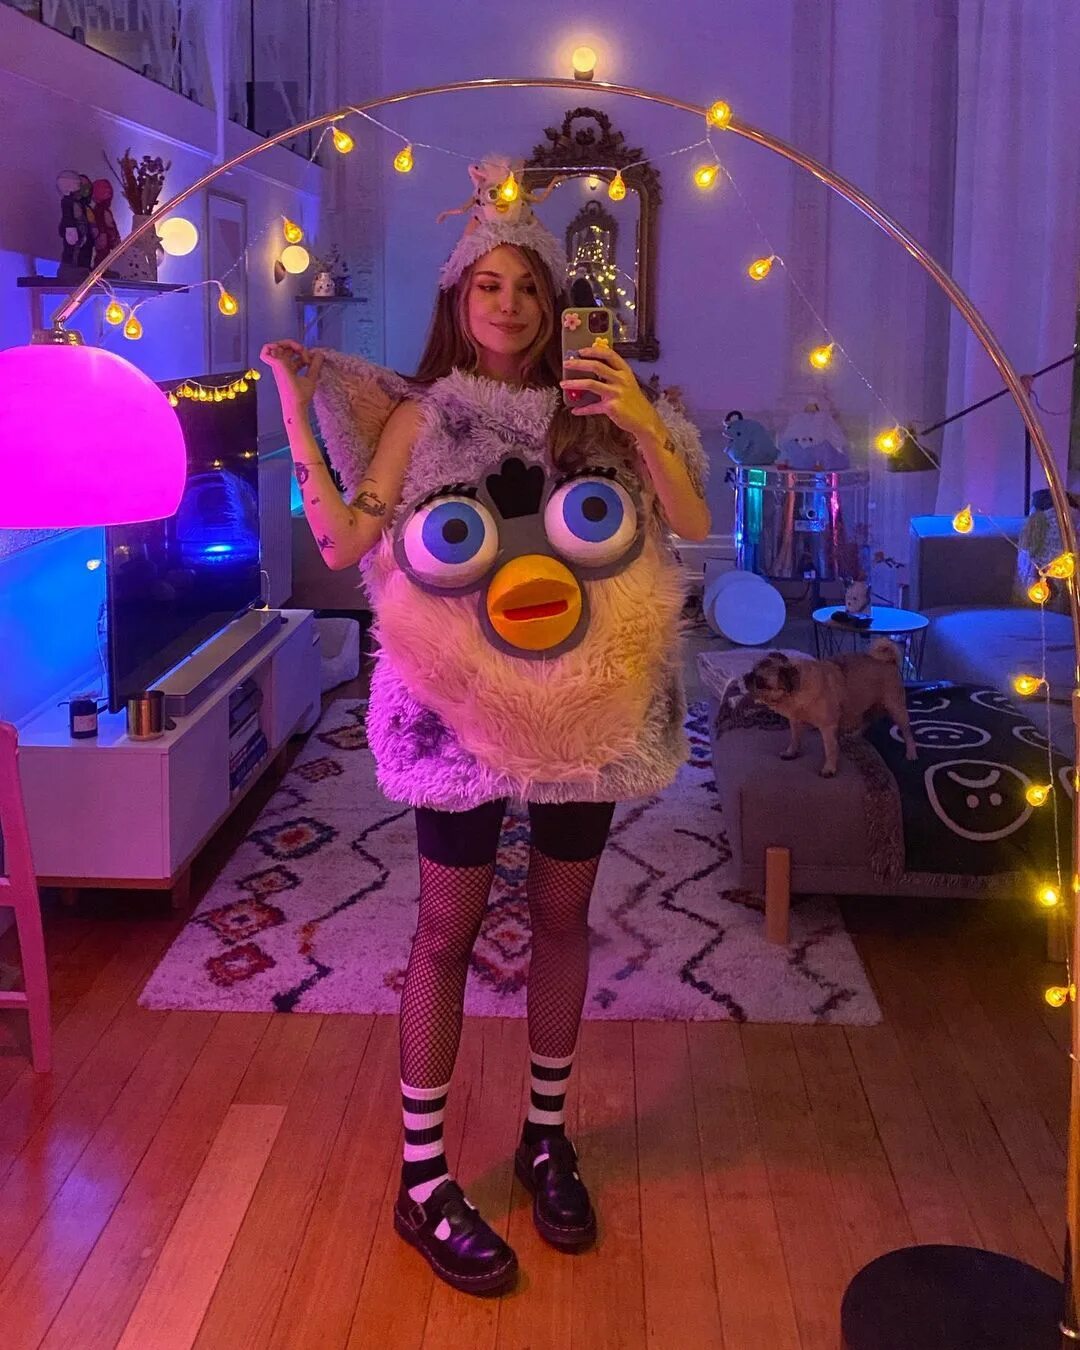 Marzia Kjellberg on Instagram: "Happy Halloween from the Furby Queen. ...